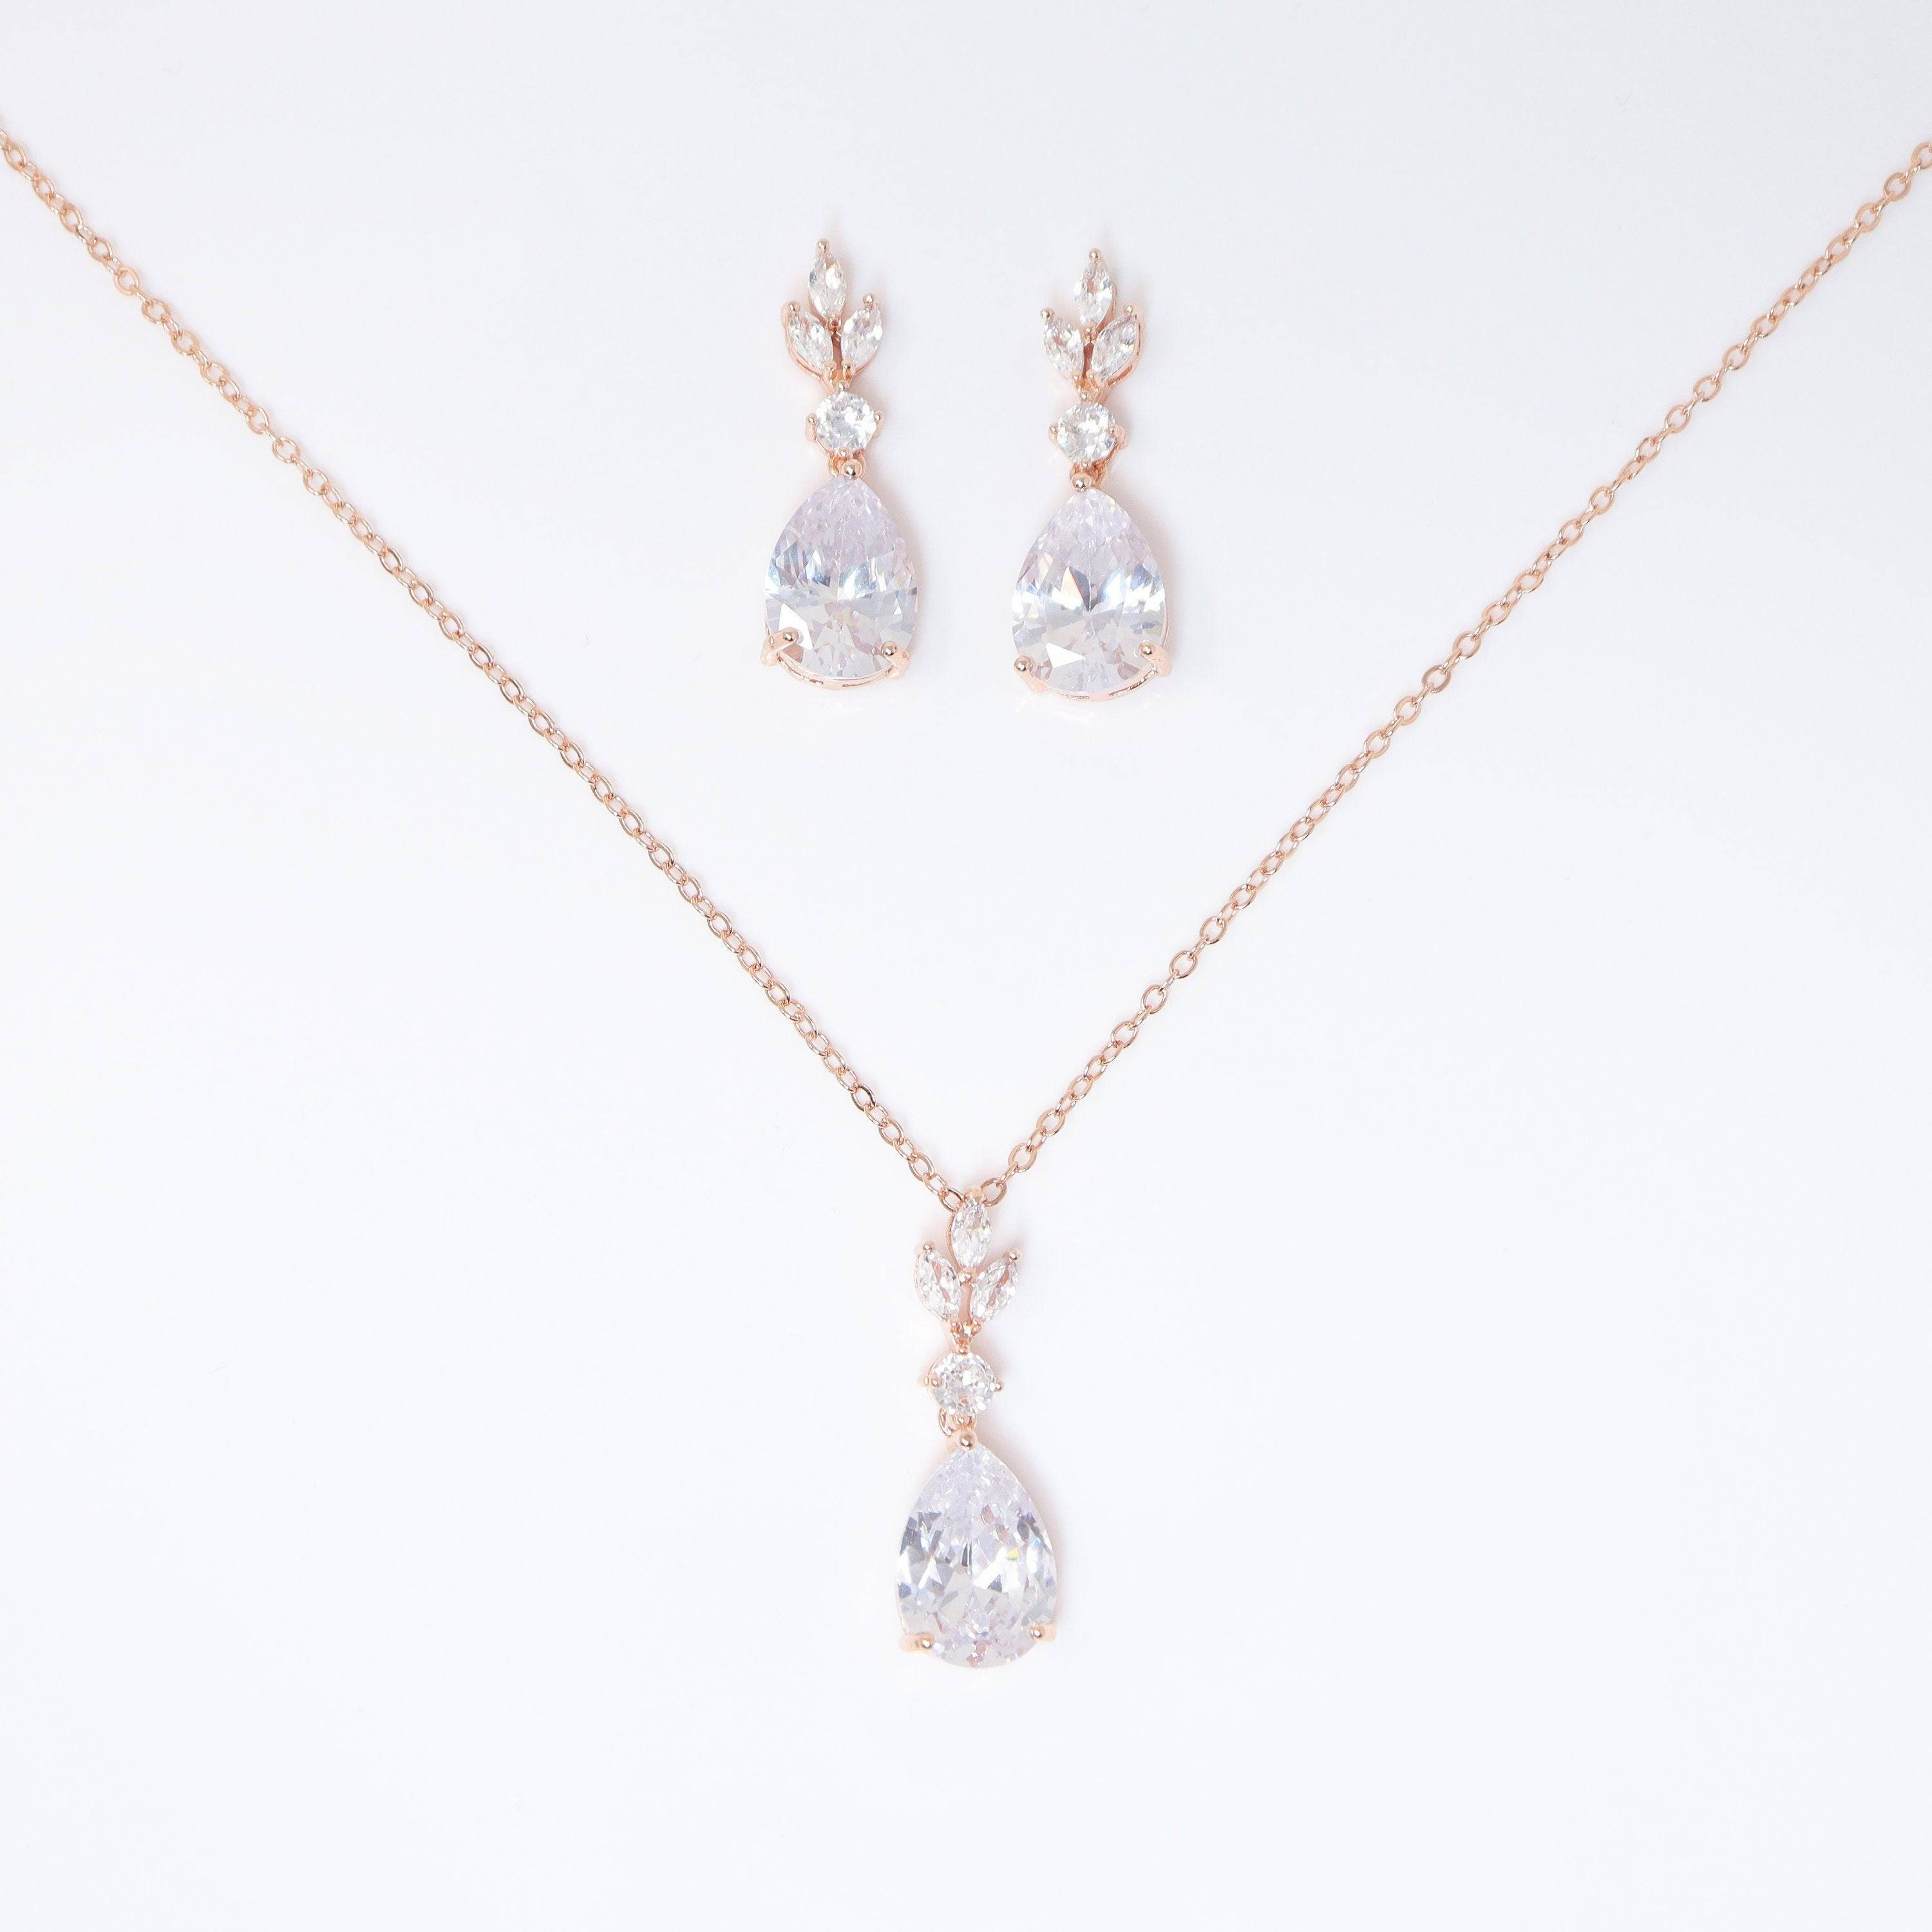 Buy dc jewels Princess Crown Design Swarovski Crystal Sterling Silver Pendant  Set for Women at Amazon.in